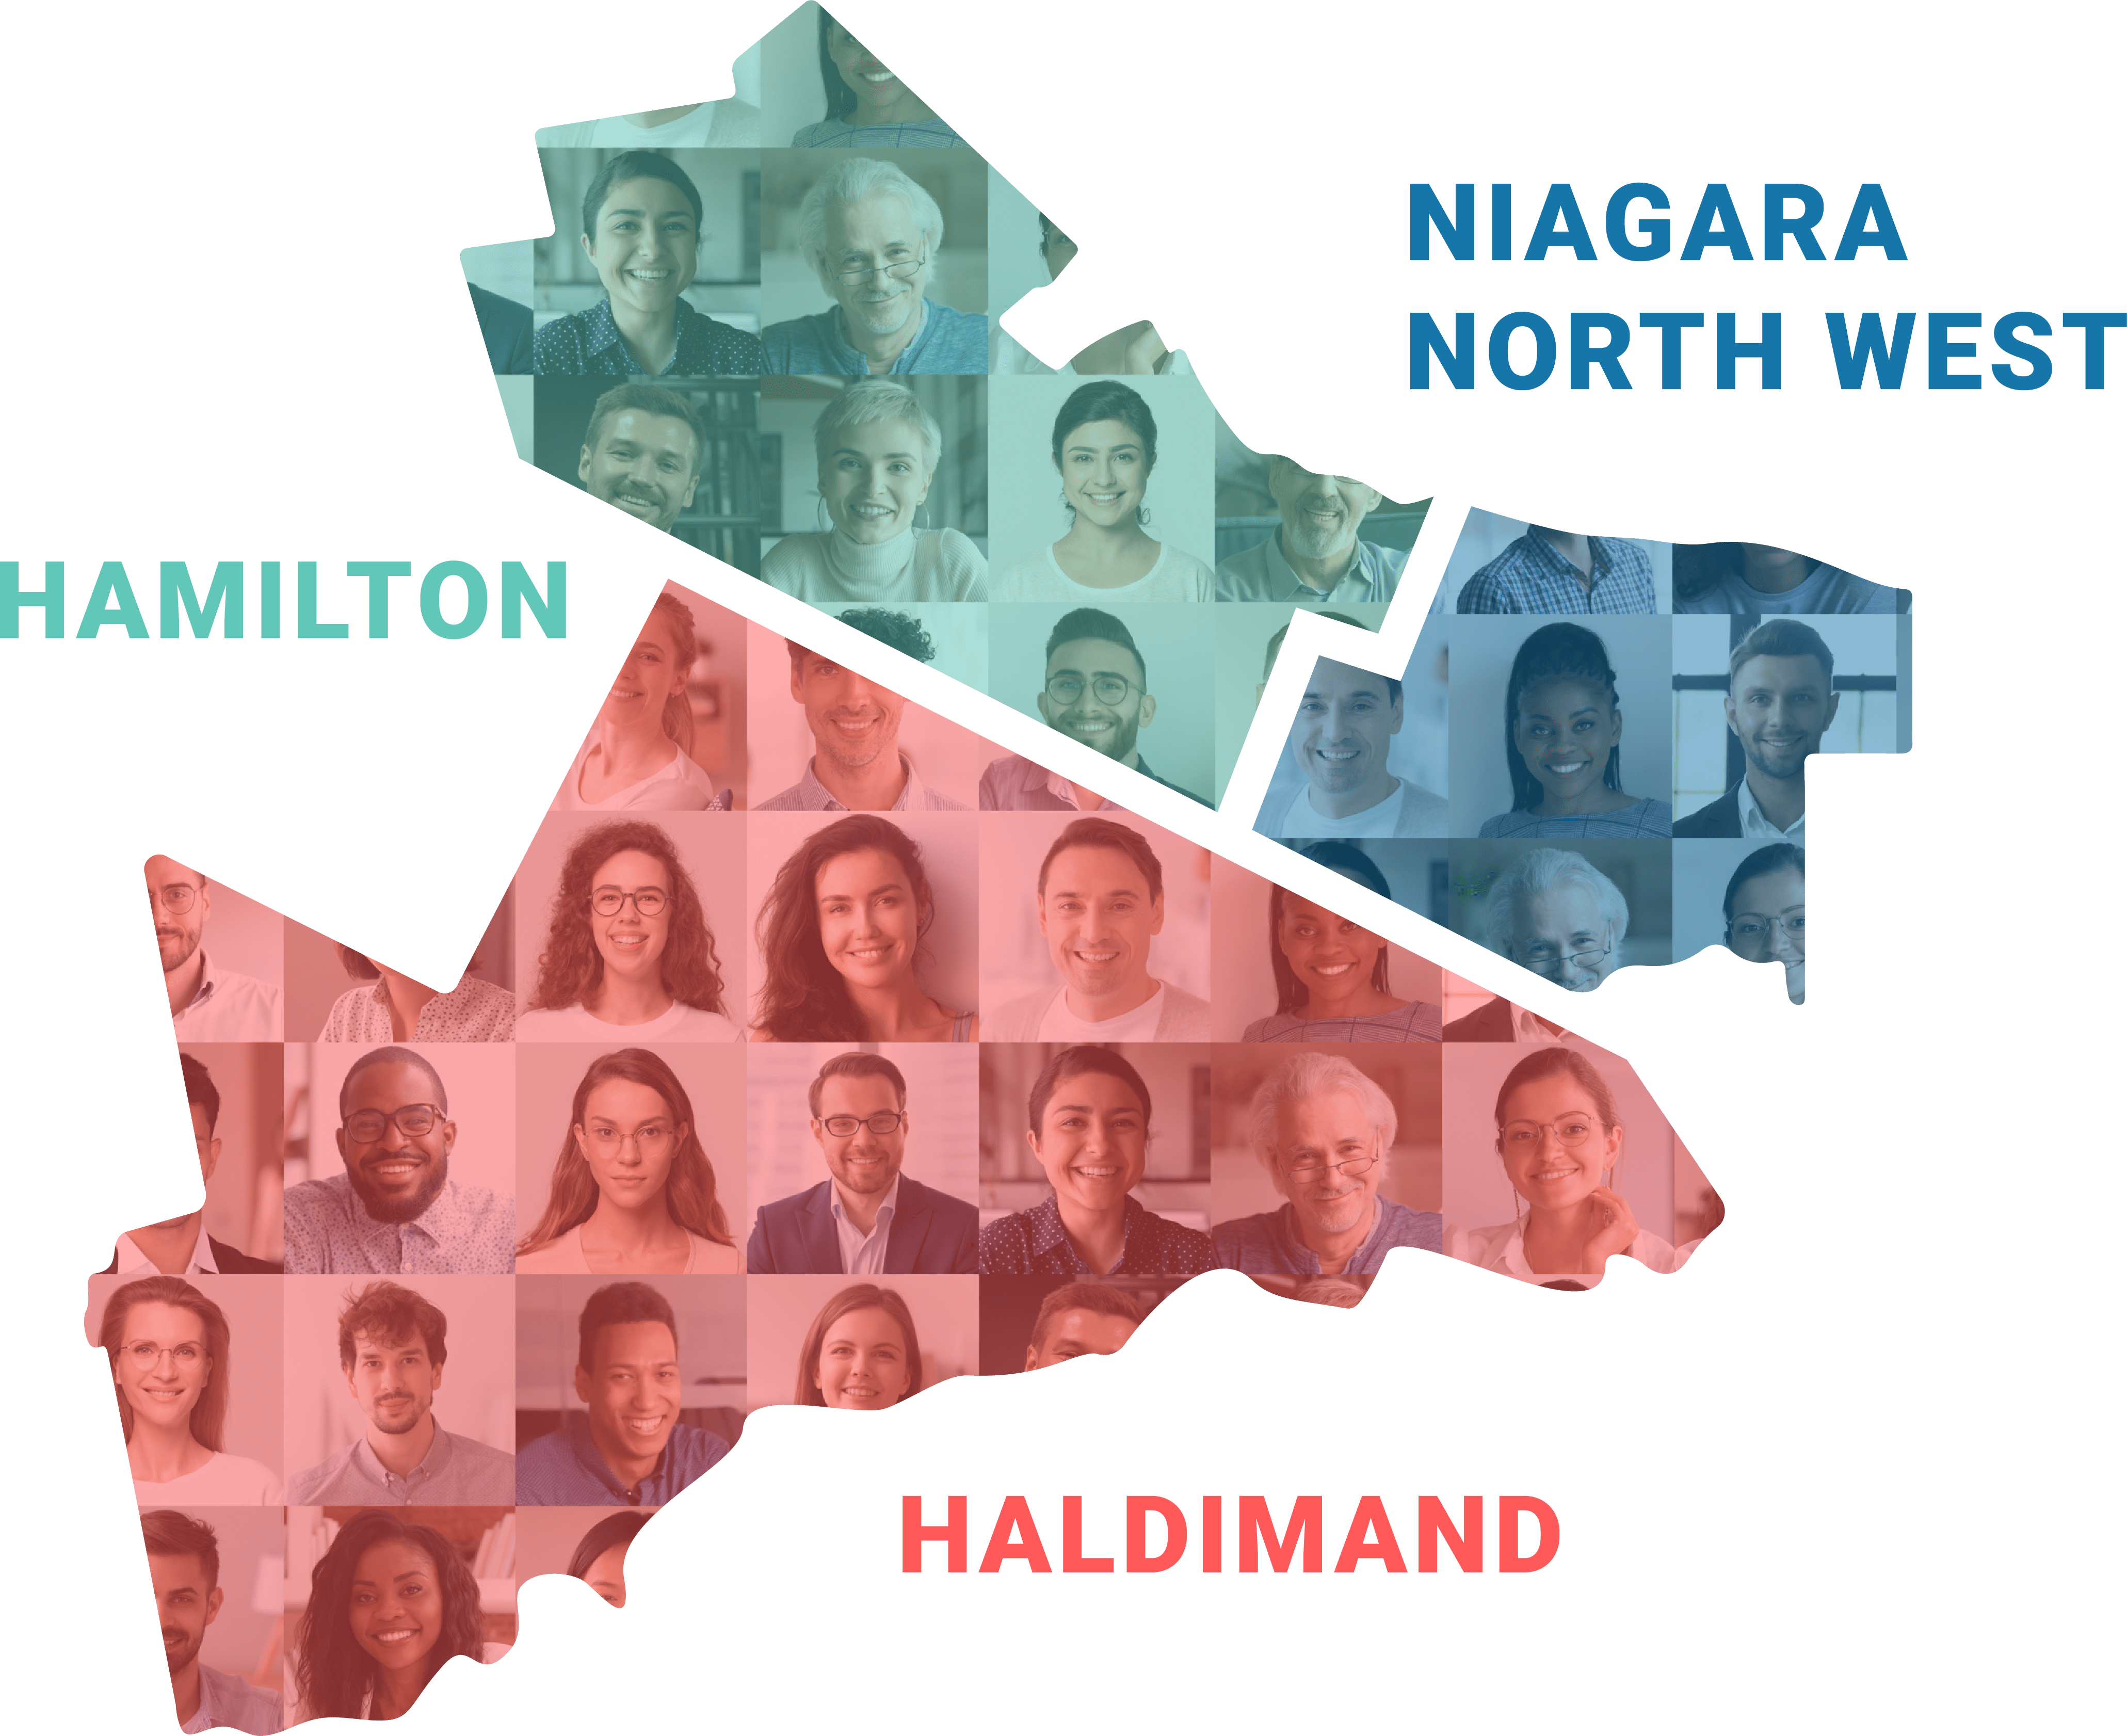 Hamilton, Haldimand, and Niagara North West Service Area